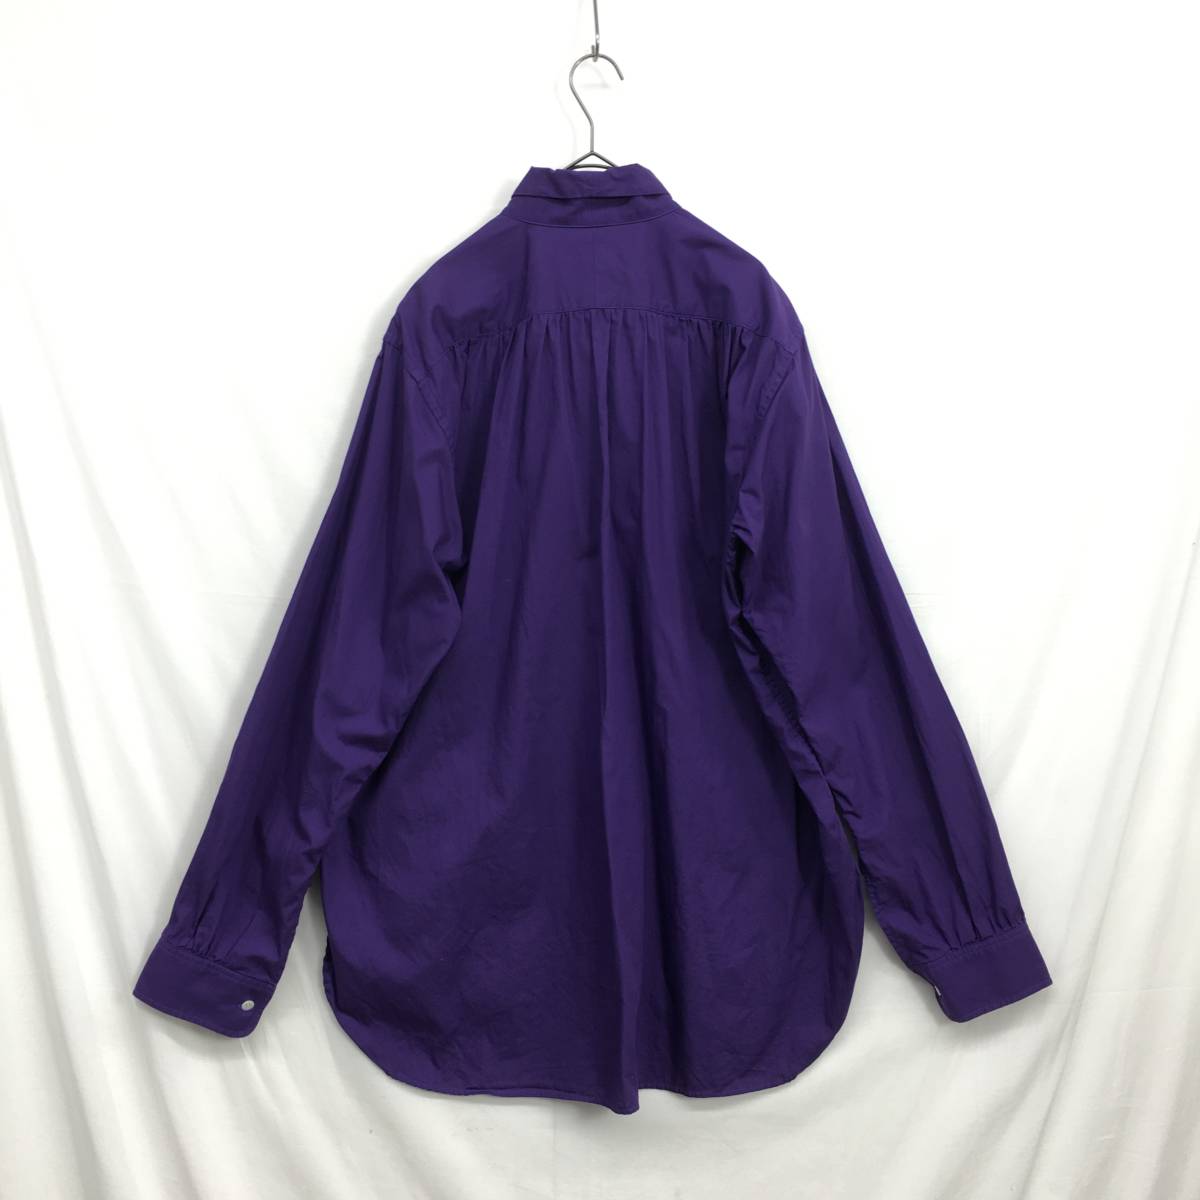 KZ6694*Needles : 22aw Ascot collar EDW shirt*M* purple series Needles Ascot color shirt 